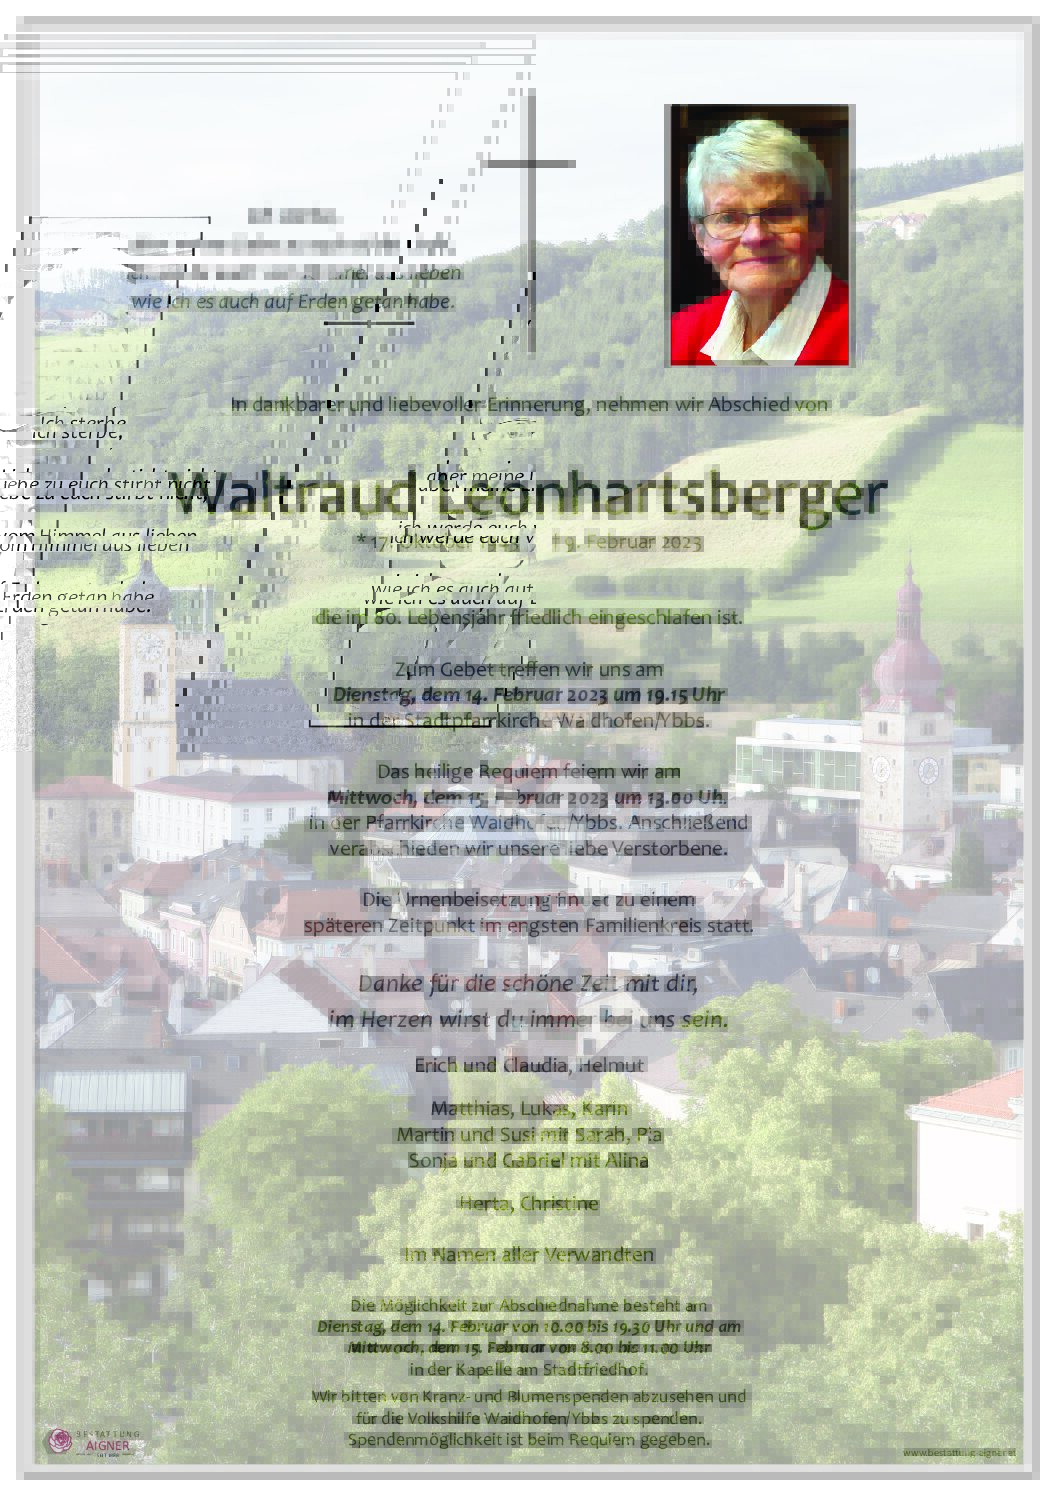 Waltraud Leonhartsberger